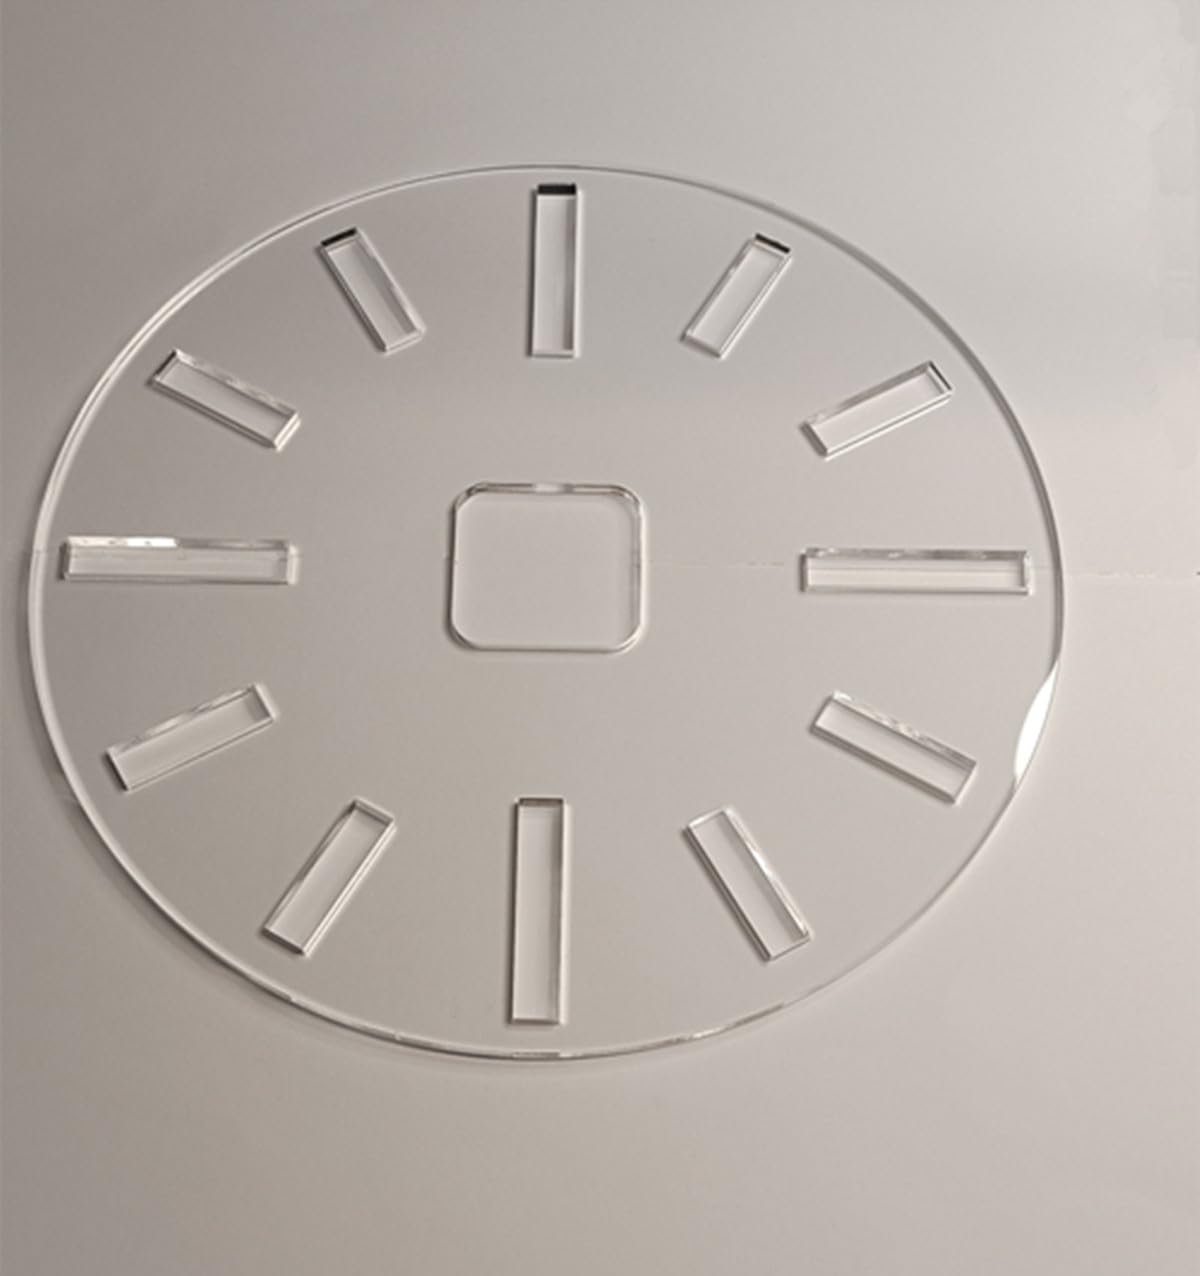 Acrylic Clock Template,12" Circle Clock Face with Clock Dials,Acrylic Router Template (12'')